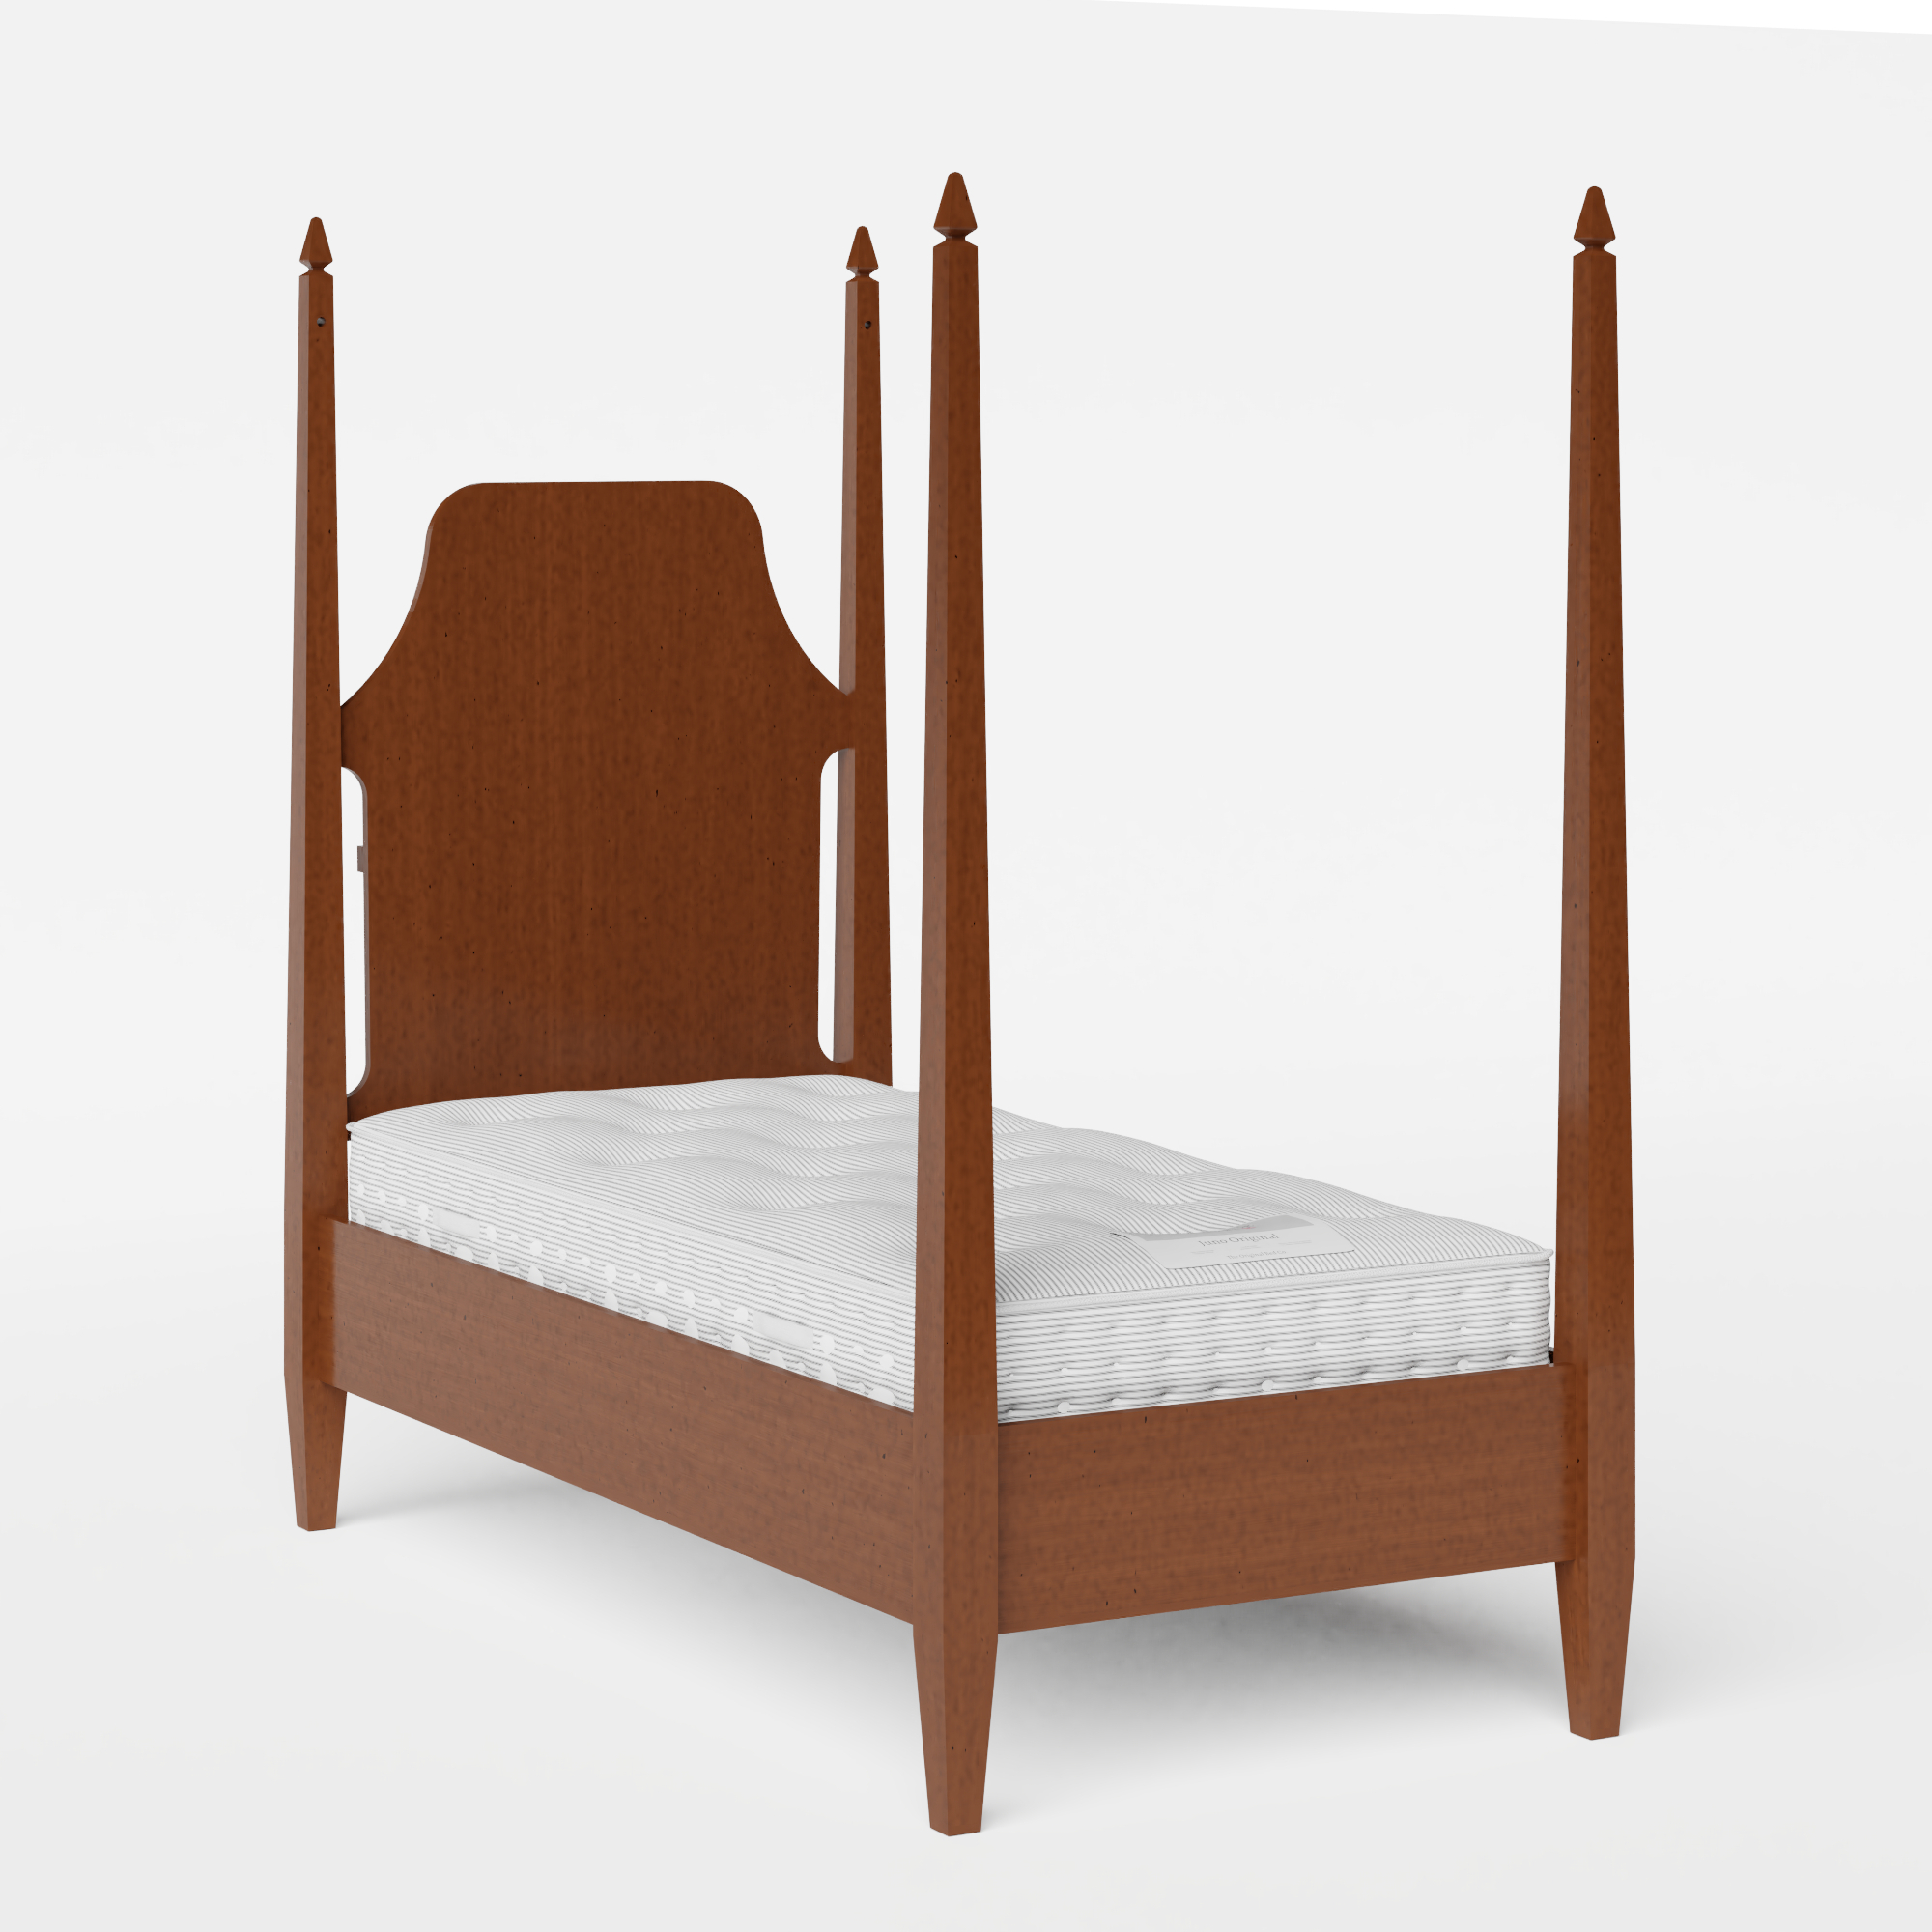 Turner cama individual de madera pintada en dark cherry con colchón